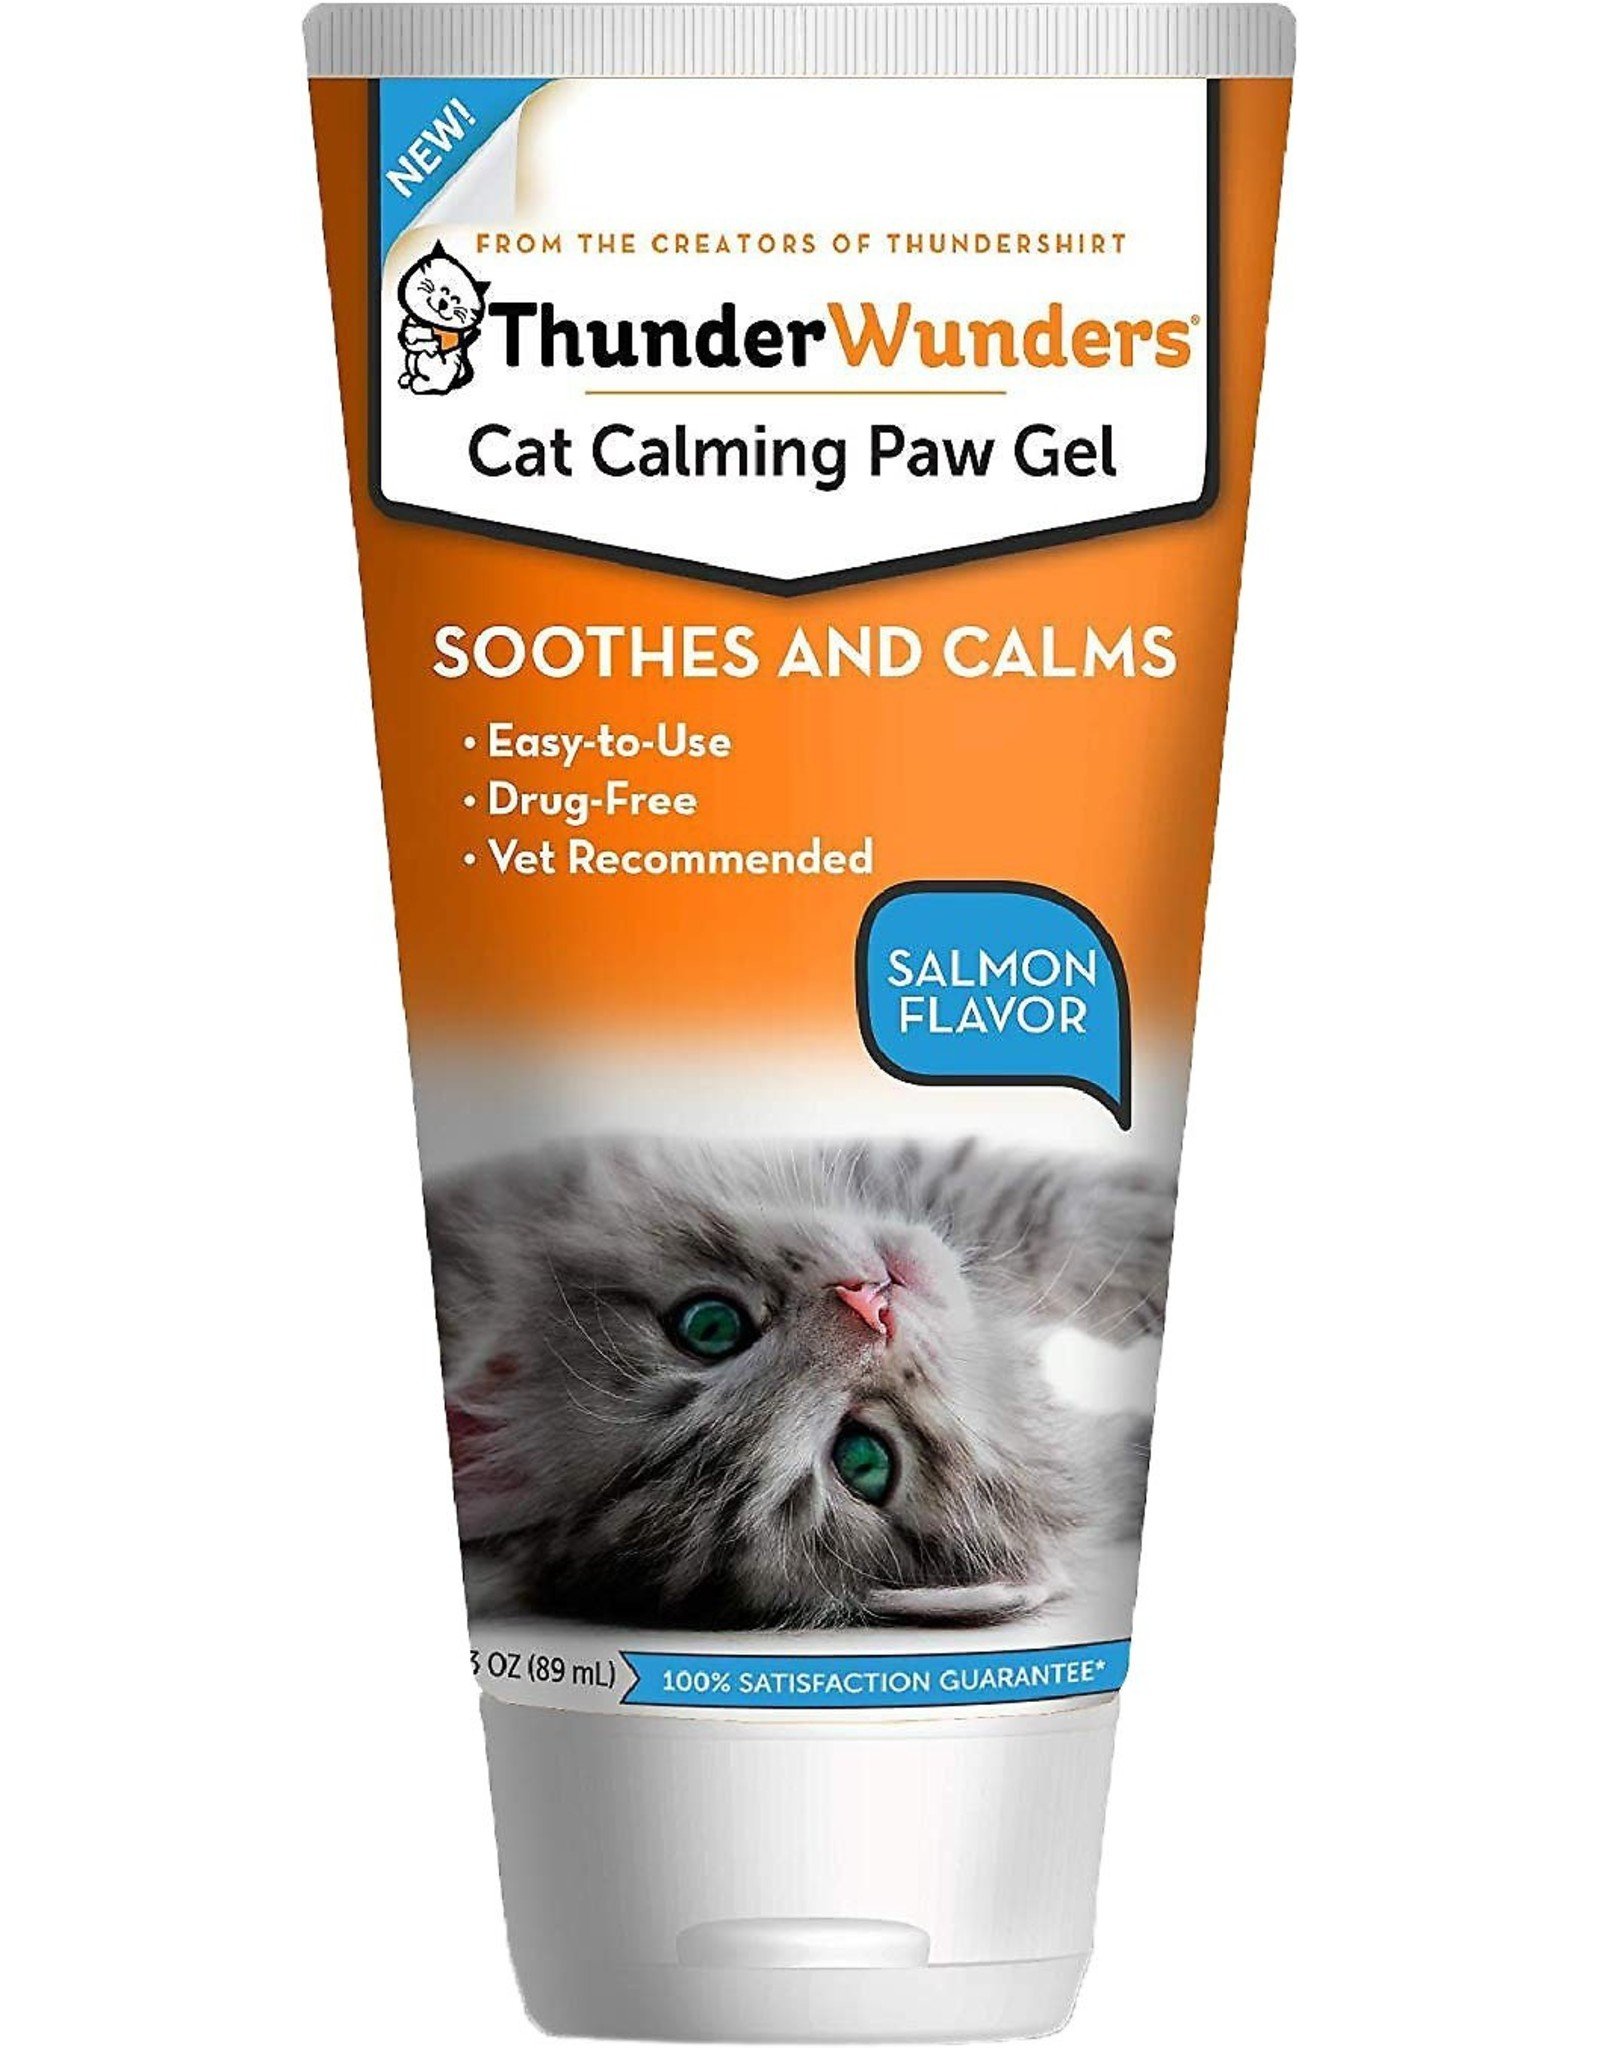 Thunderworks Inc. THUNDERWUNDERS CAT CALMING PAW GEL 3OZ